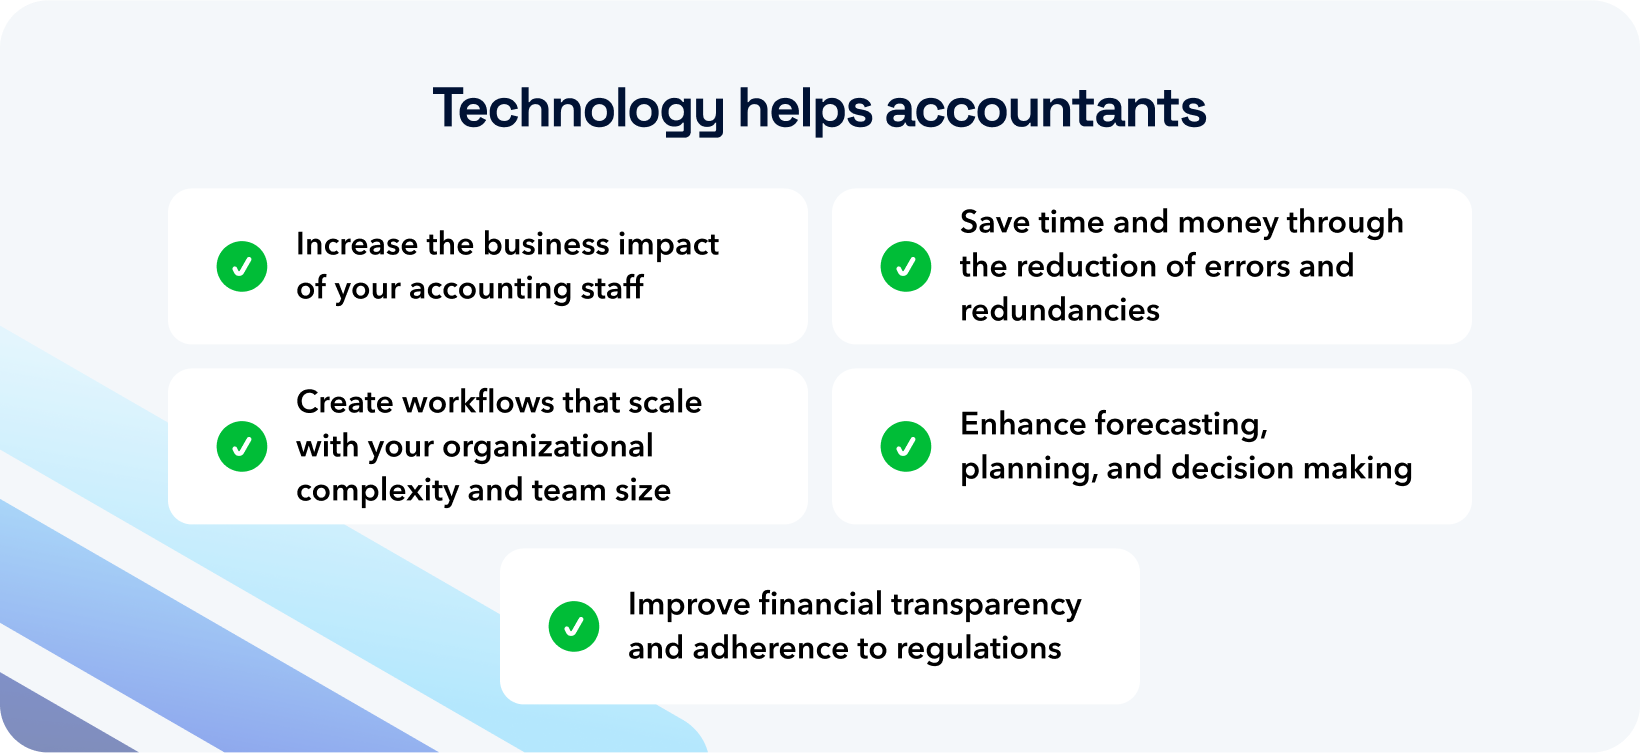 Technology helps accountants